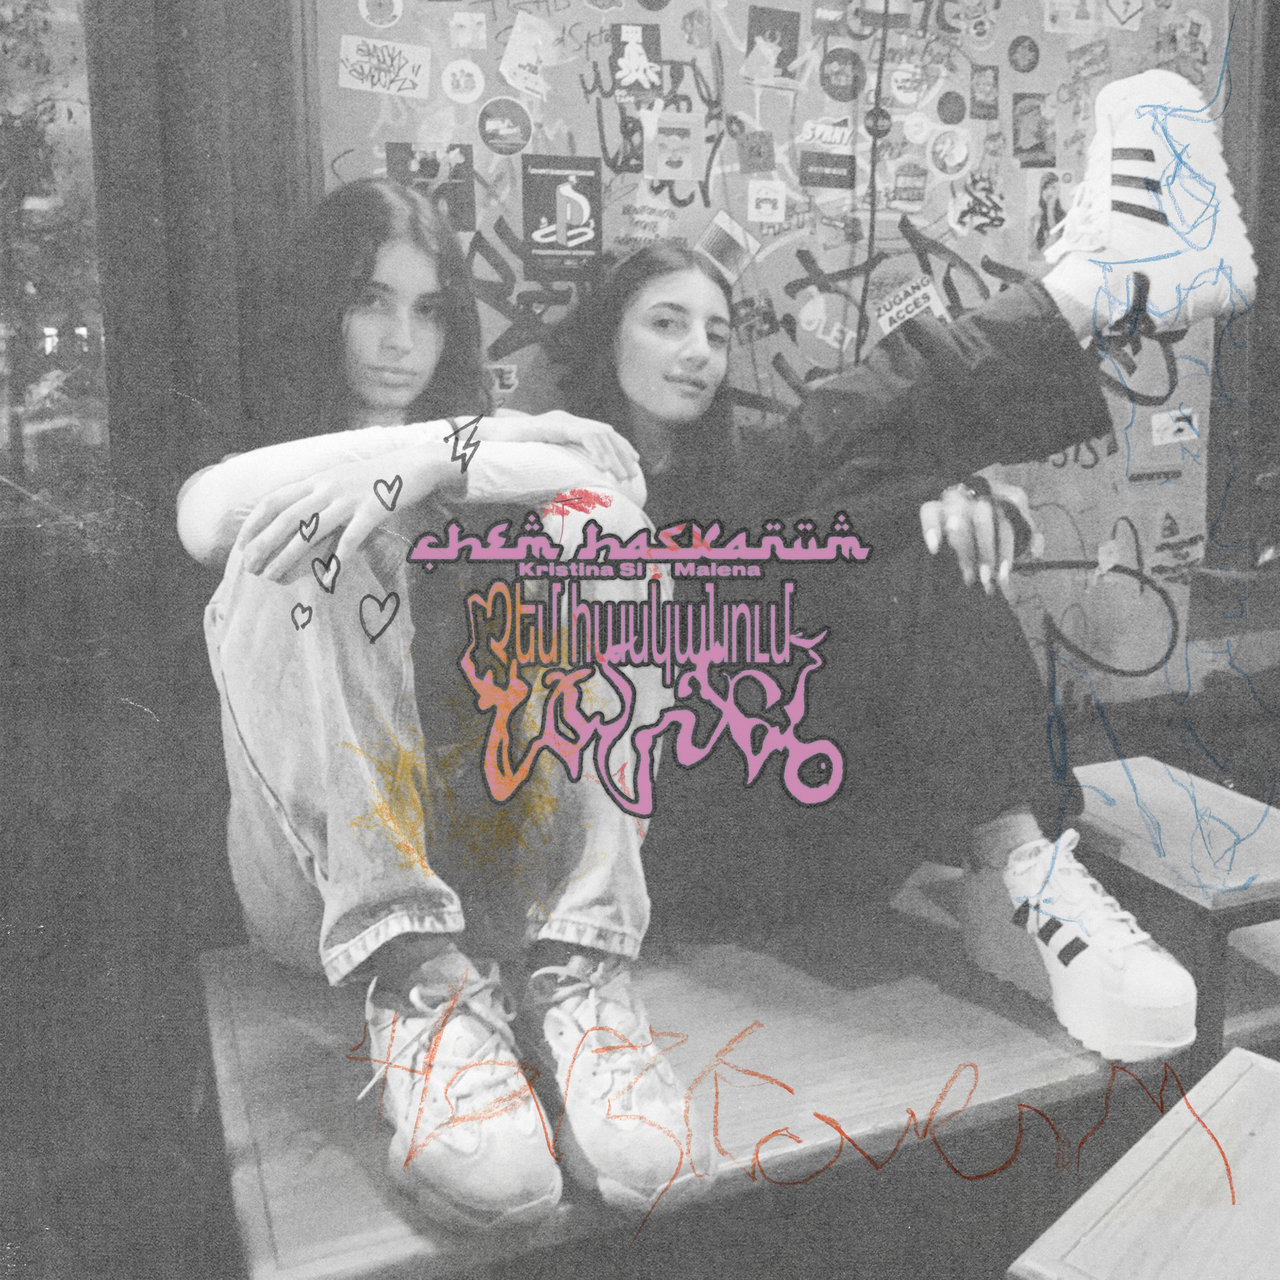 Kristina Si featuring Maléna — Chem Haskanum cover artwork